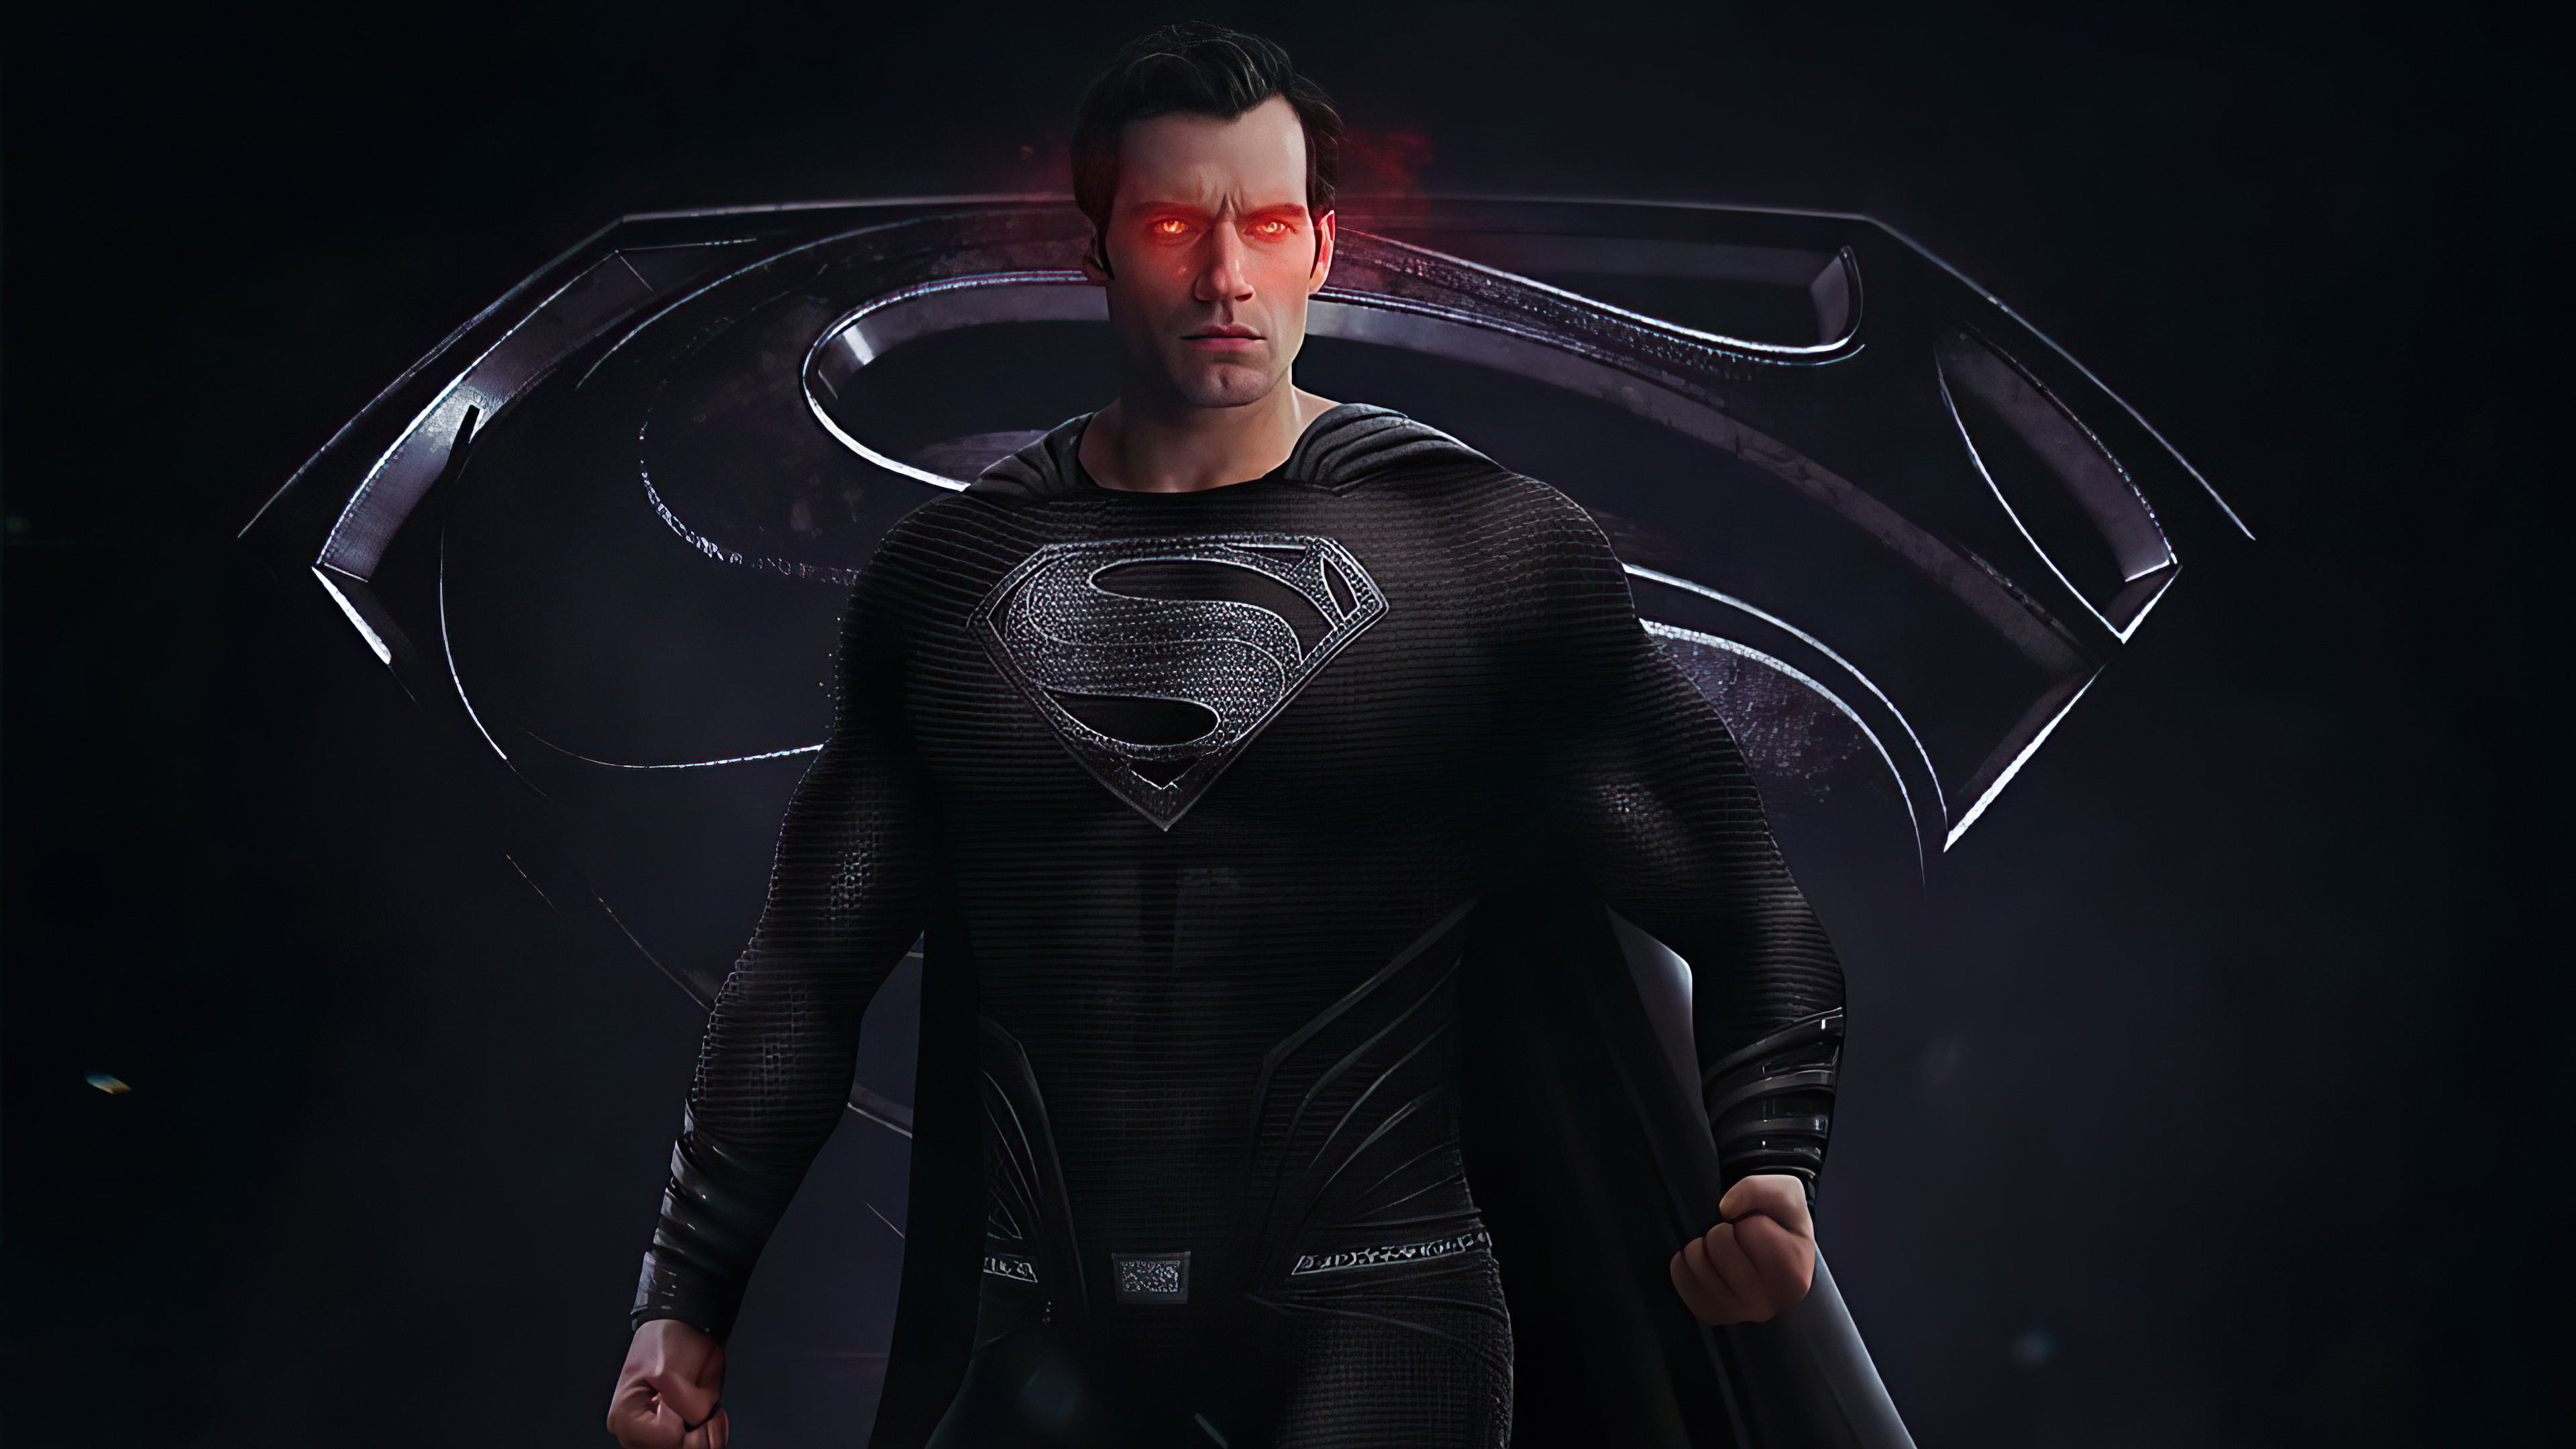 Black Superman suit, Superhero wallpapers, Superpowers unleashed, Epic imagery, 3840x2160 4K Desktop